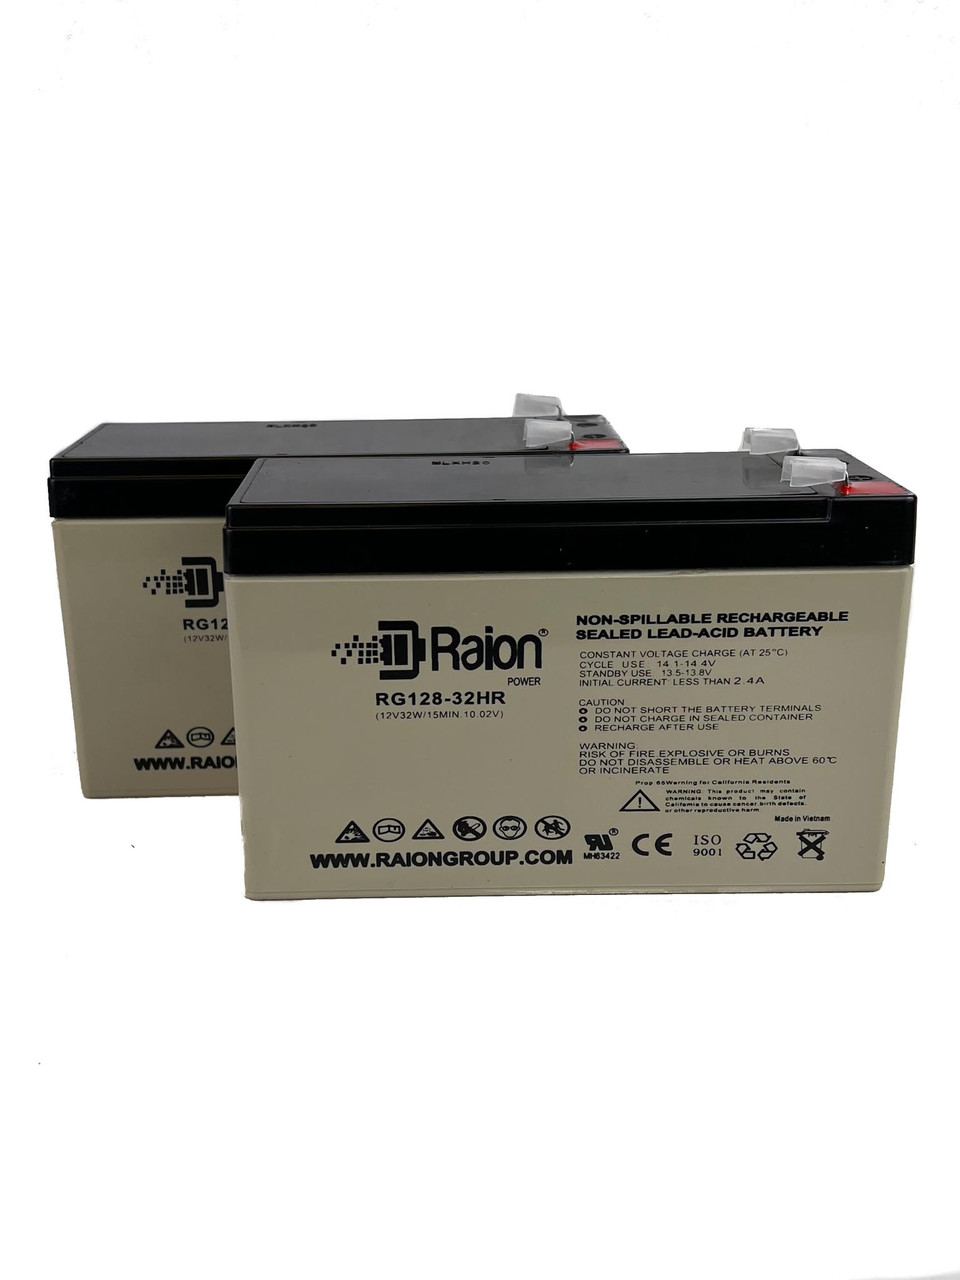 Raion Power 12V 7.5Ah High Rate Discharge UPS Batteries for Ultra 1025 VA 615 WATTS ULT33044 - 2 Pack